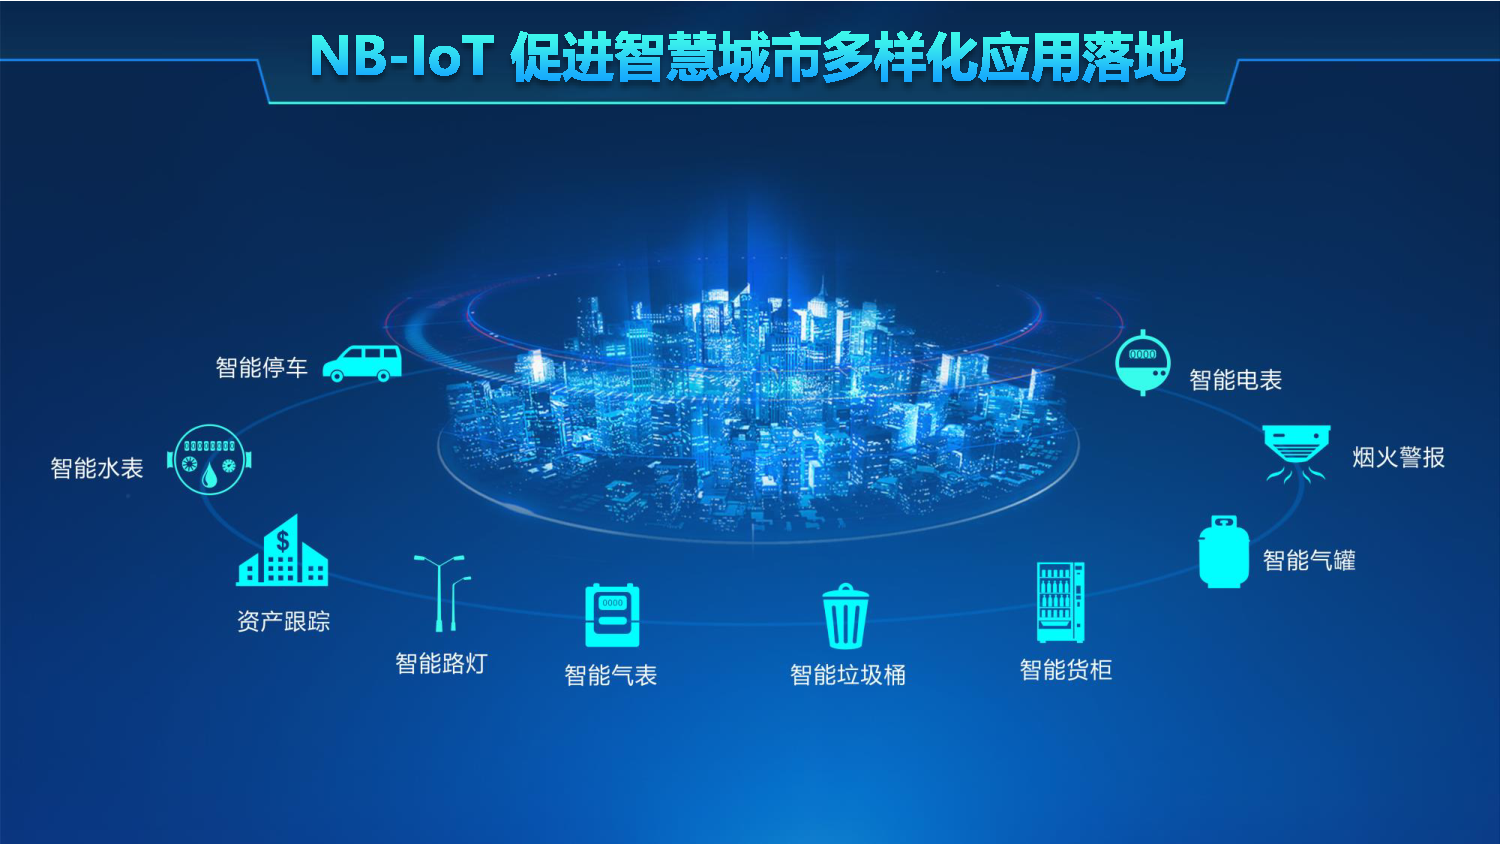 NB-IoT 新变化 新前景-罗伟【2020大湾区物联网创新技术及应用大会PPT】图片